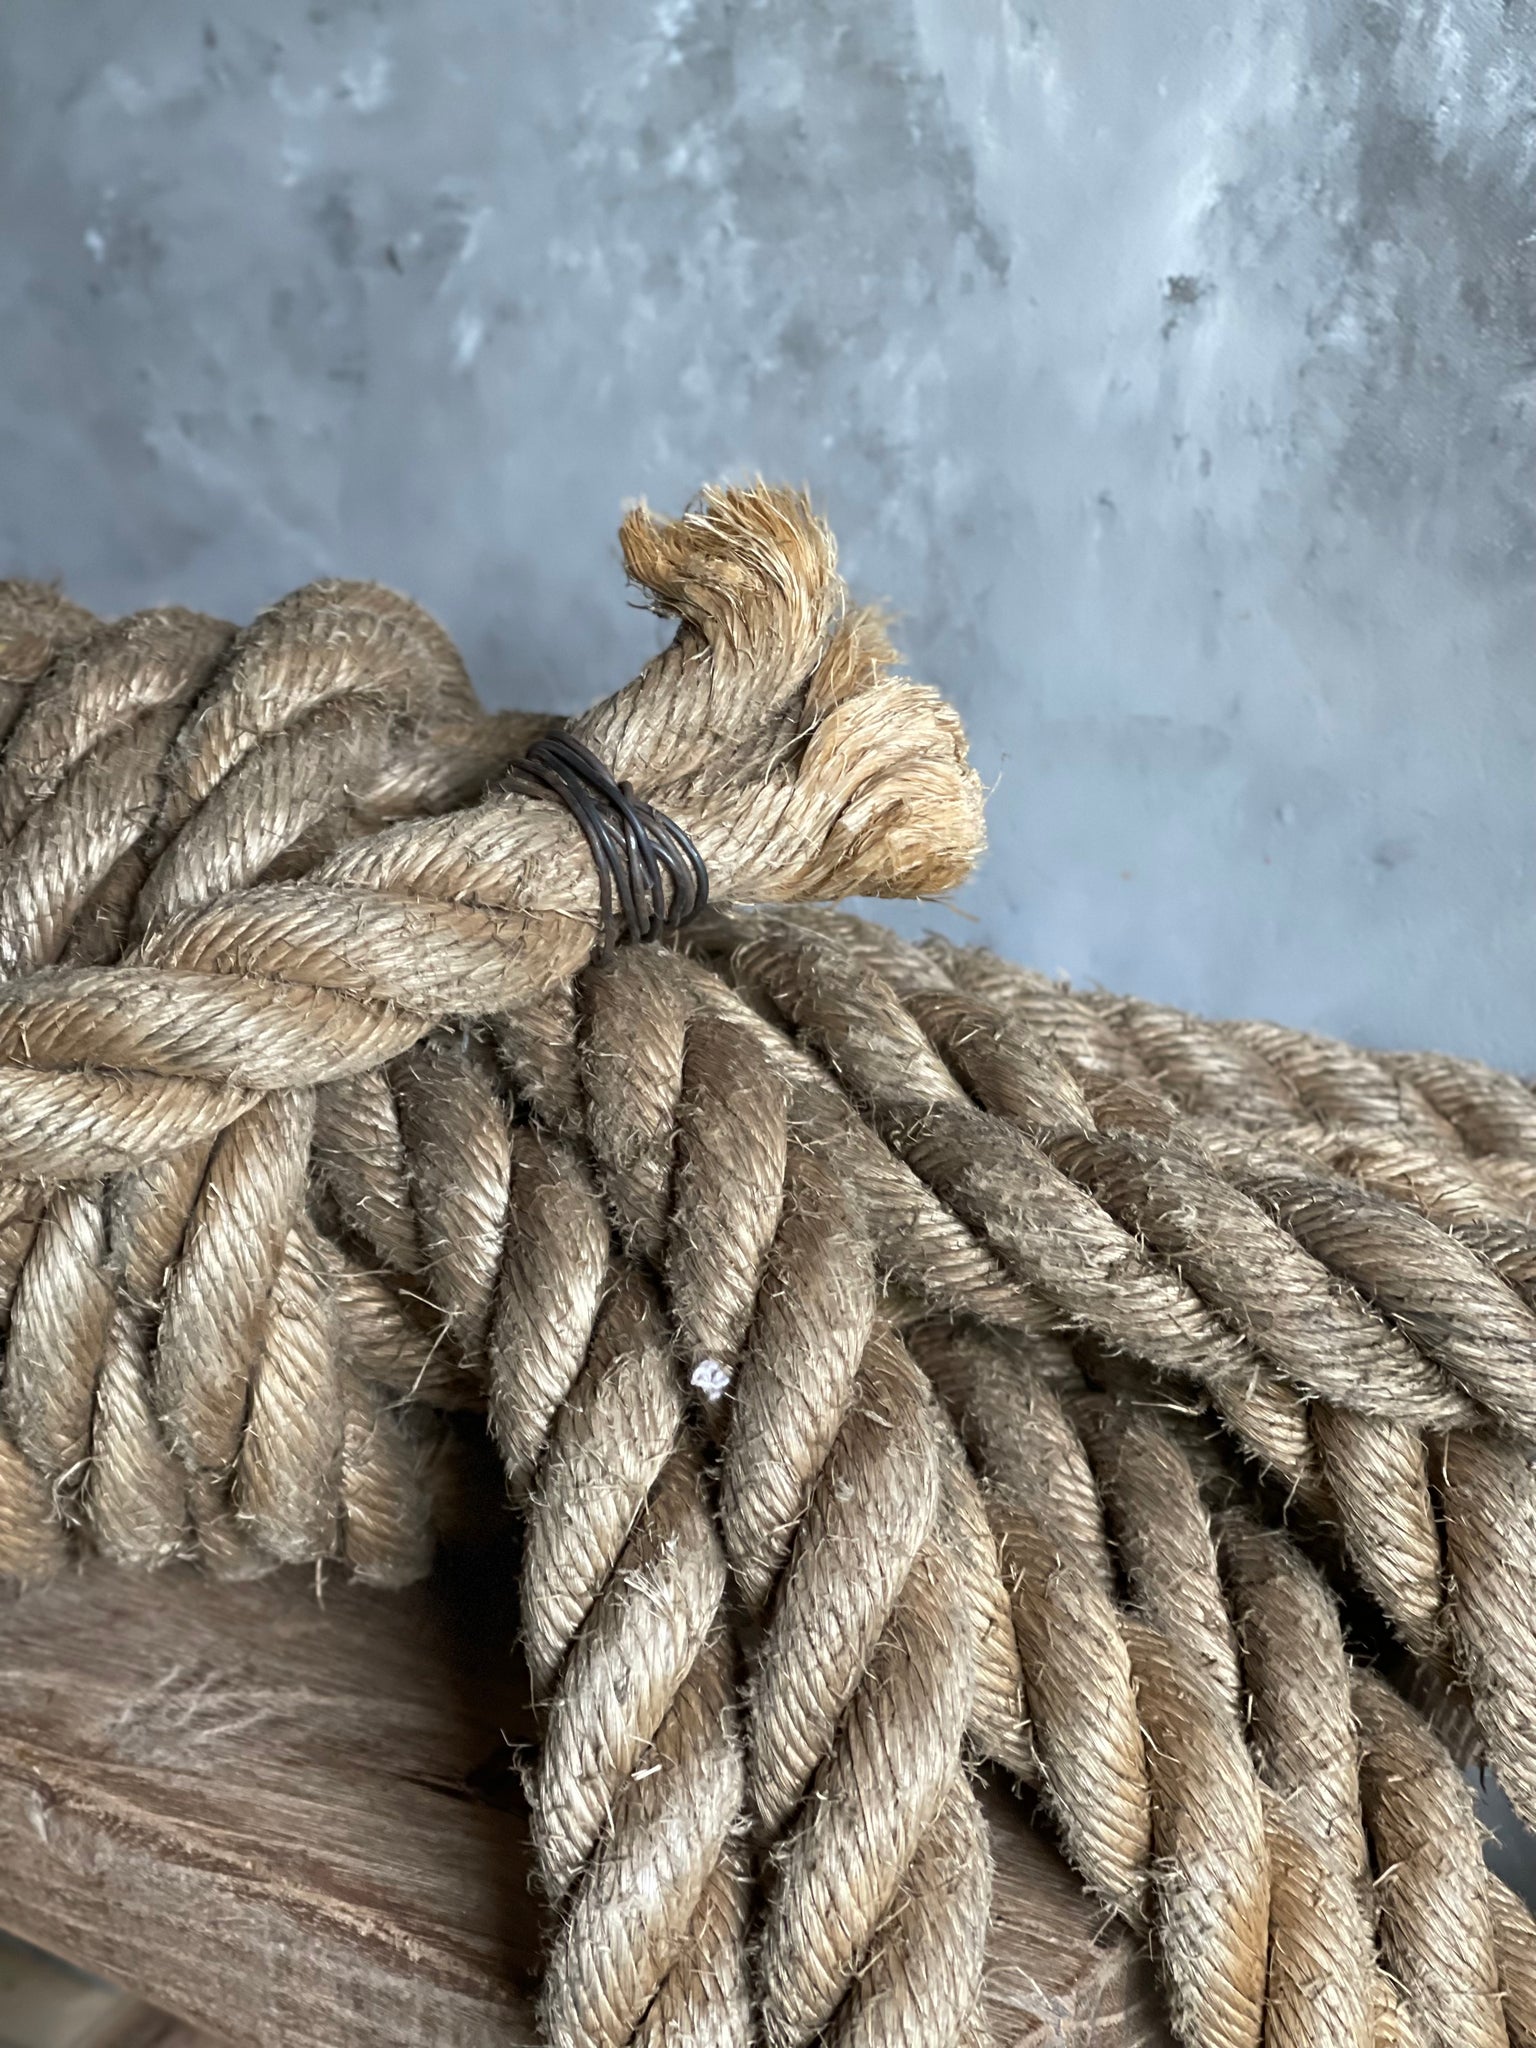 Vintage Large Size Thick Nautical Rope. – Picket Fence Imports